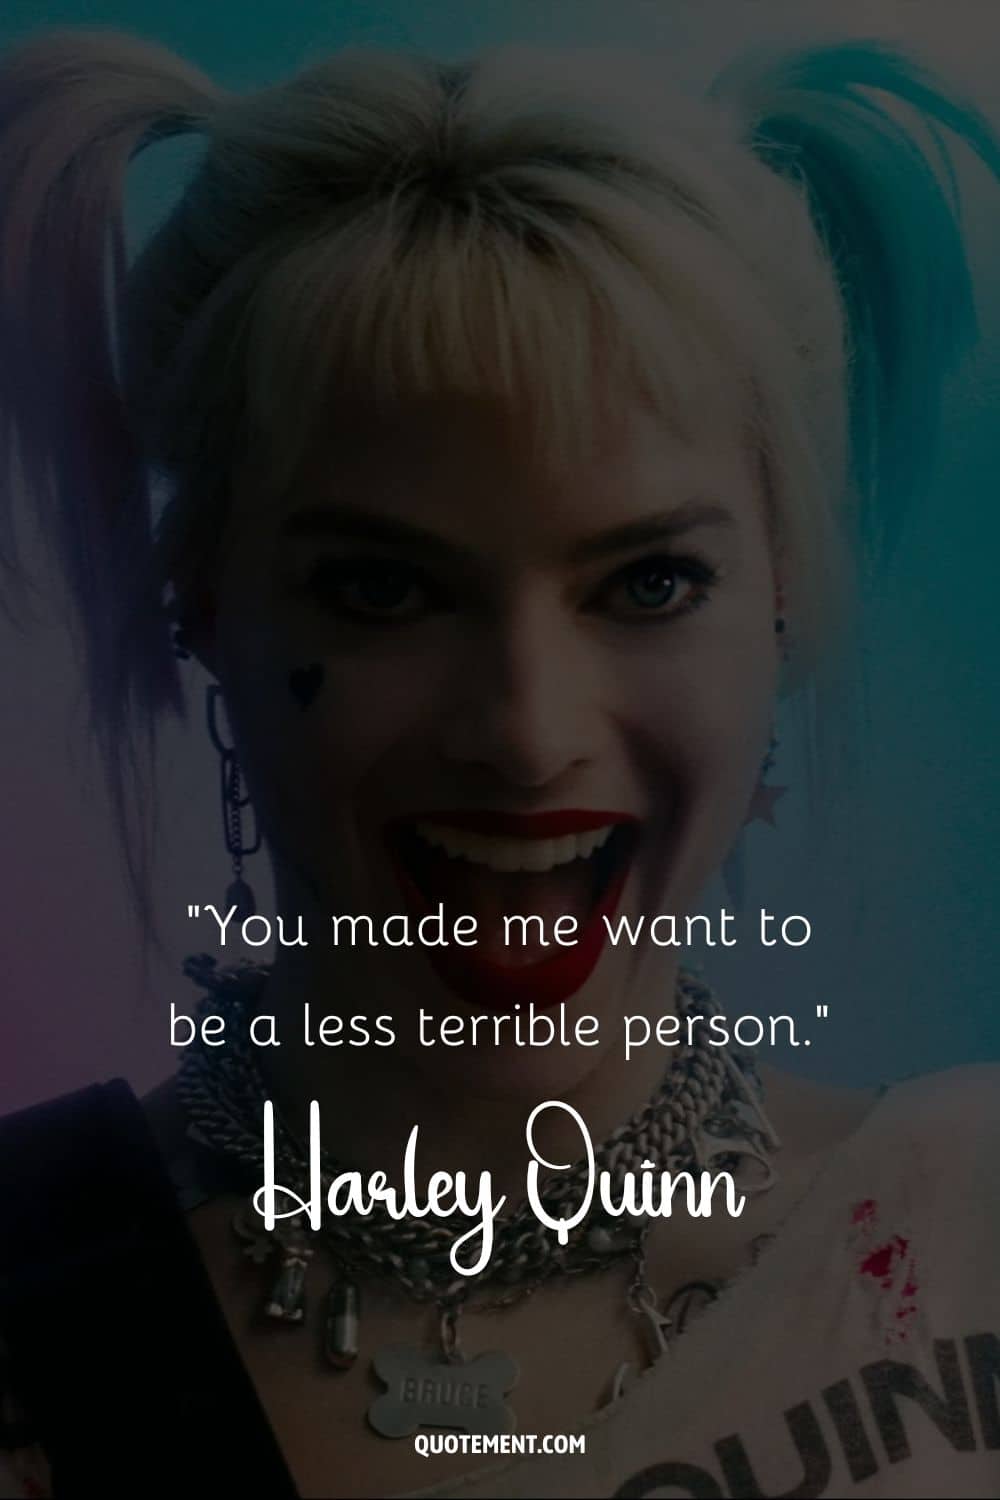 Harley Quinn's wicked grin lights up her mayhem.